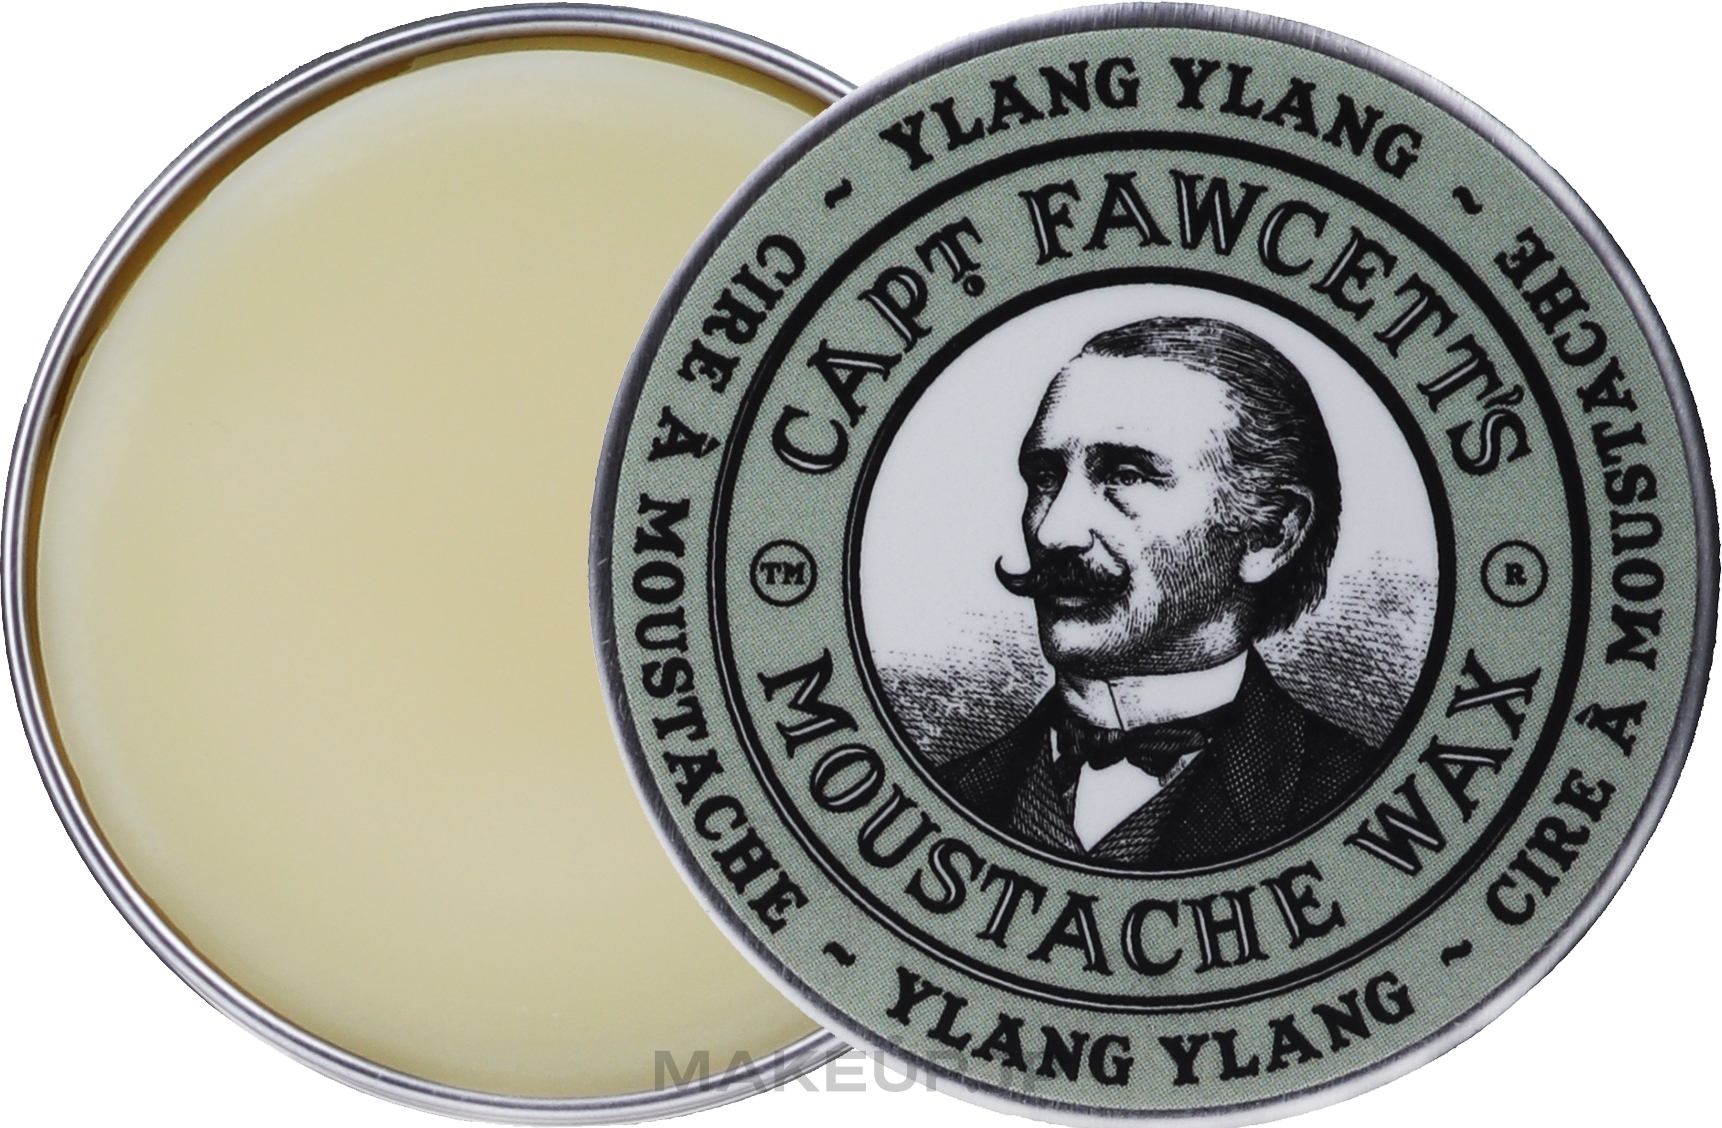 Moustache Wax - Captain Fawcett Ylang Ylang Moustache Wax — photo 15 ml